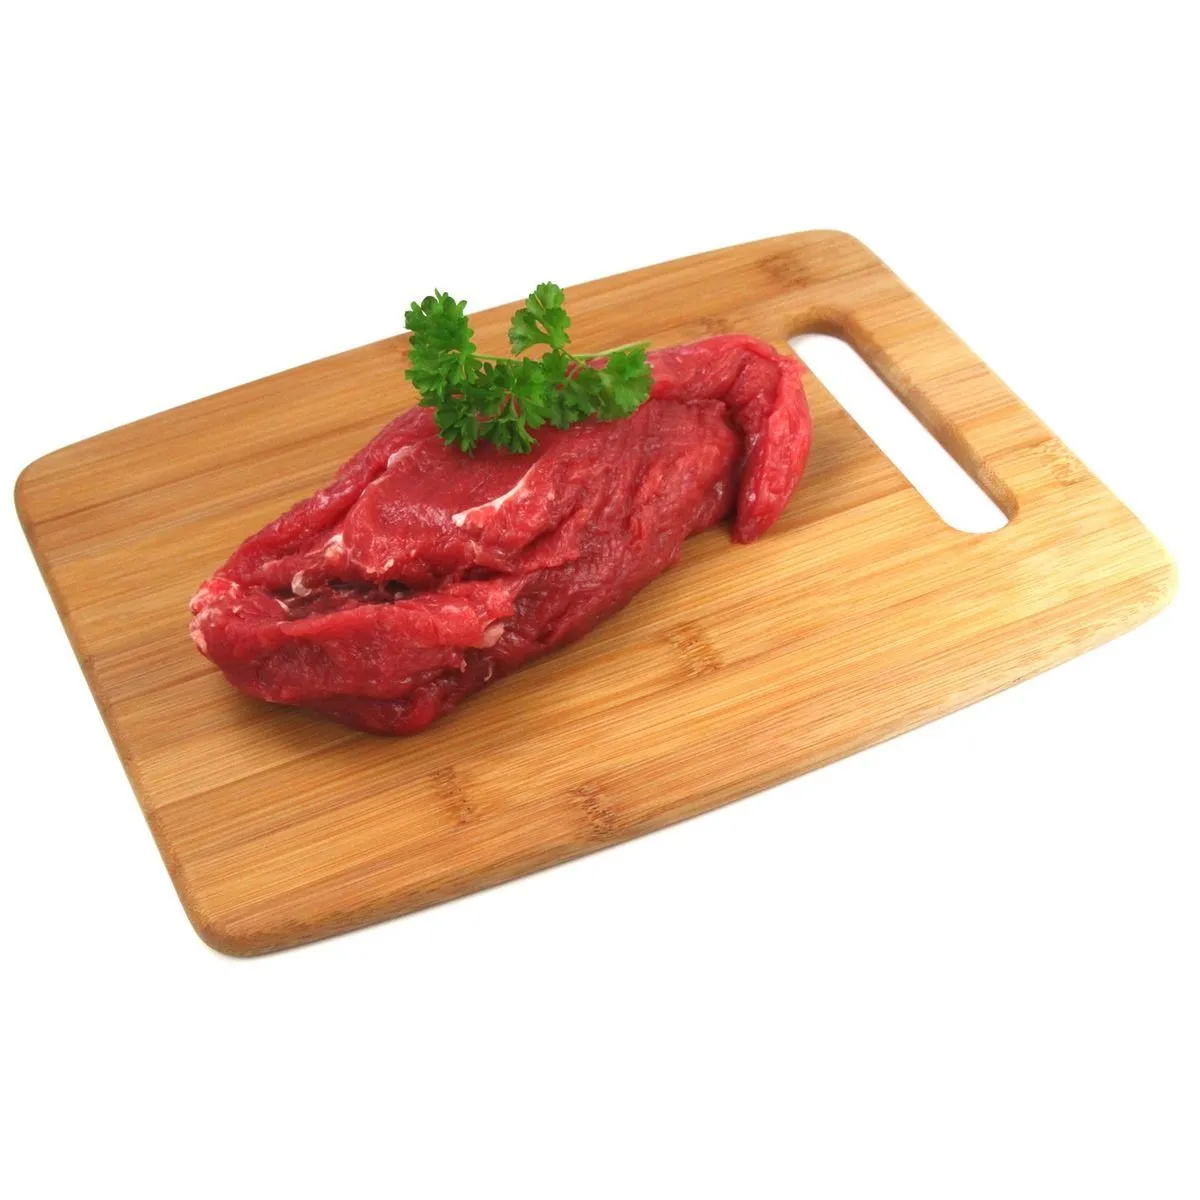 viande bovine: pièce à fondue ou brochette